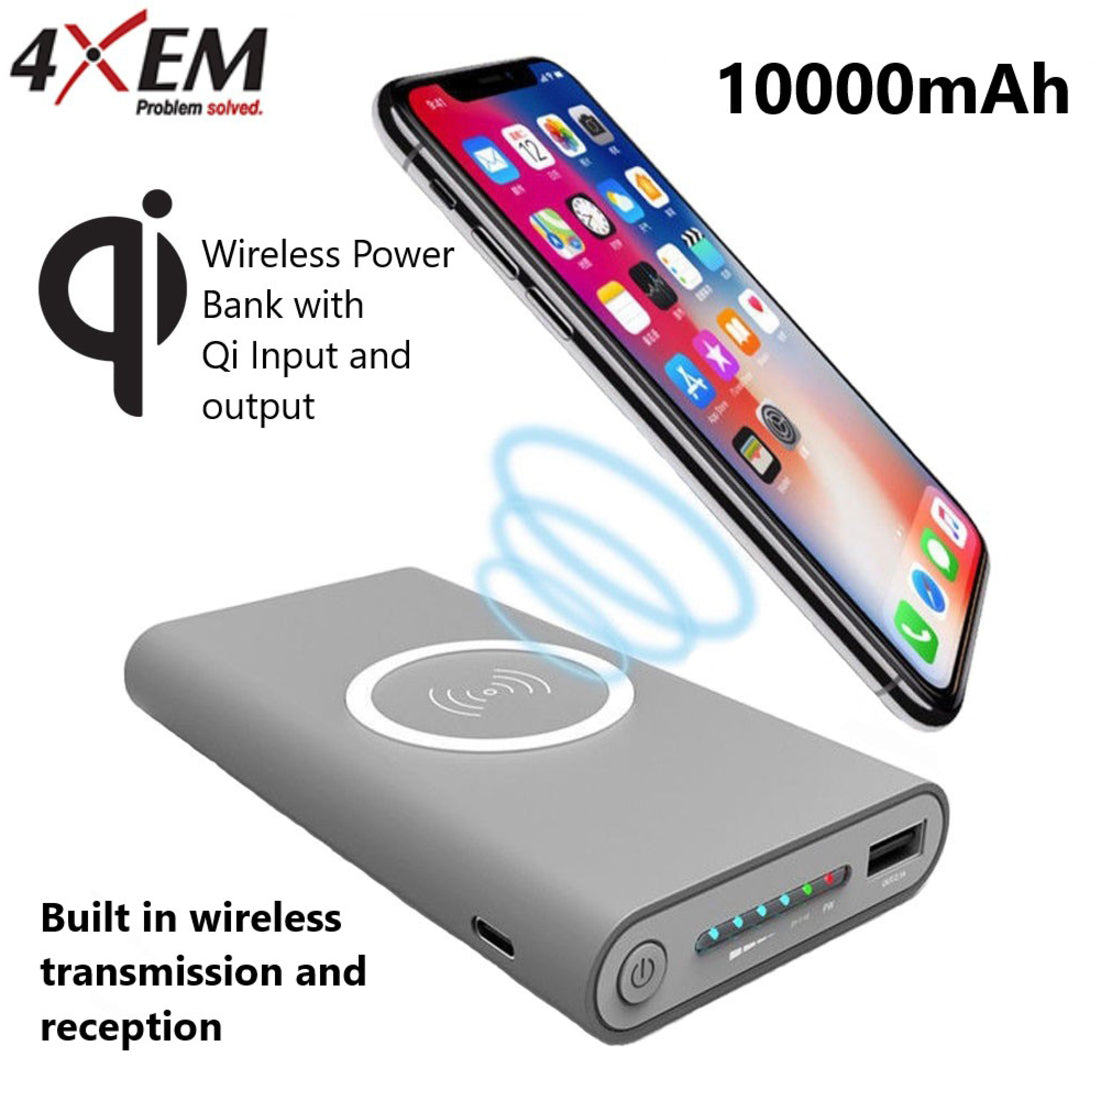 4XEM 4XWLSPWRBANKGR Fast Wireless Charging Power Bank Grey, 10000mAh Capacity